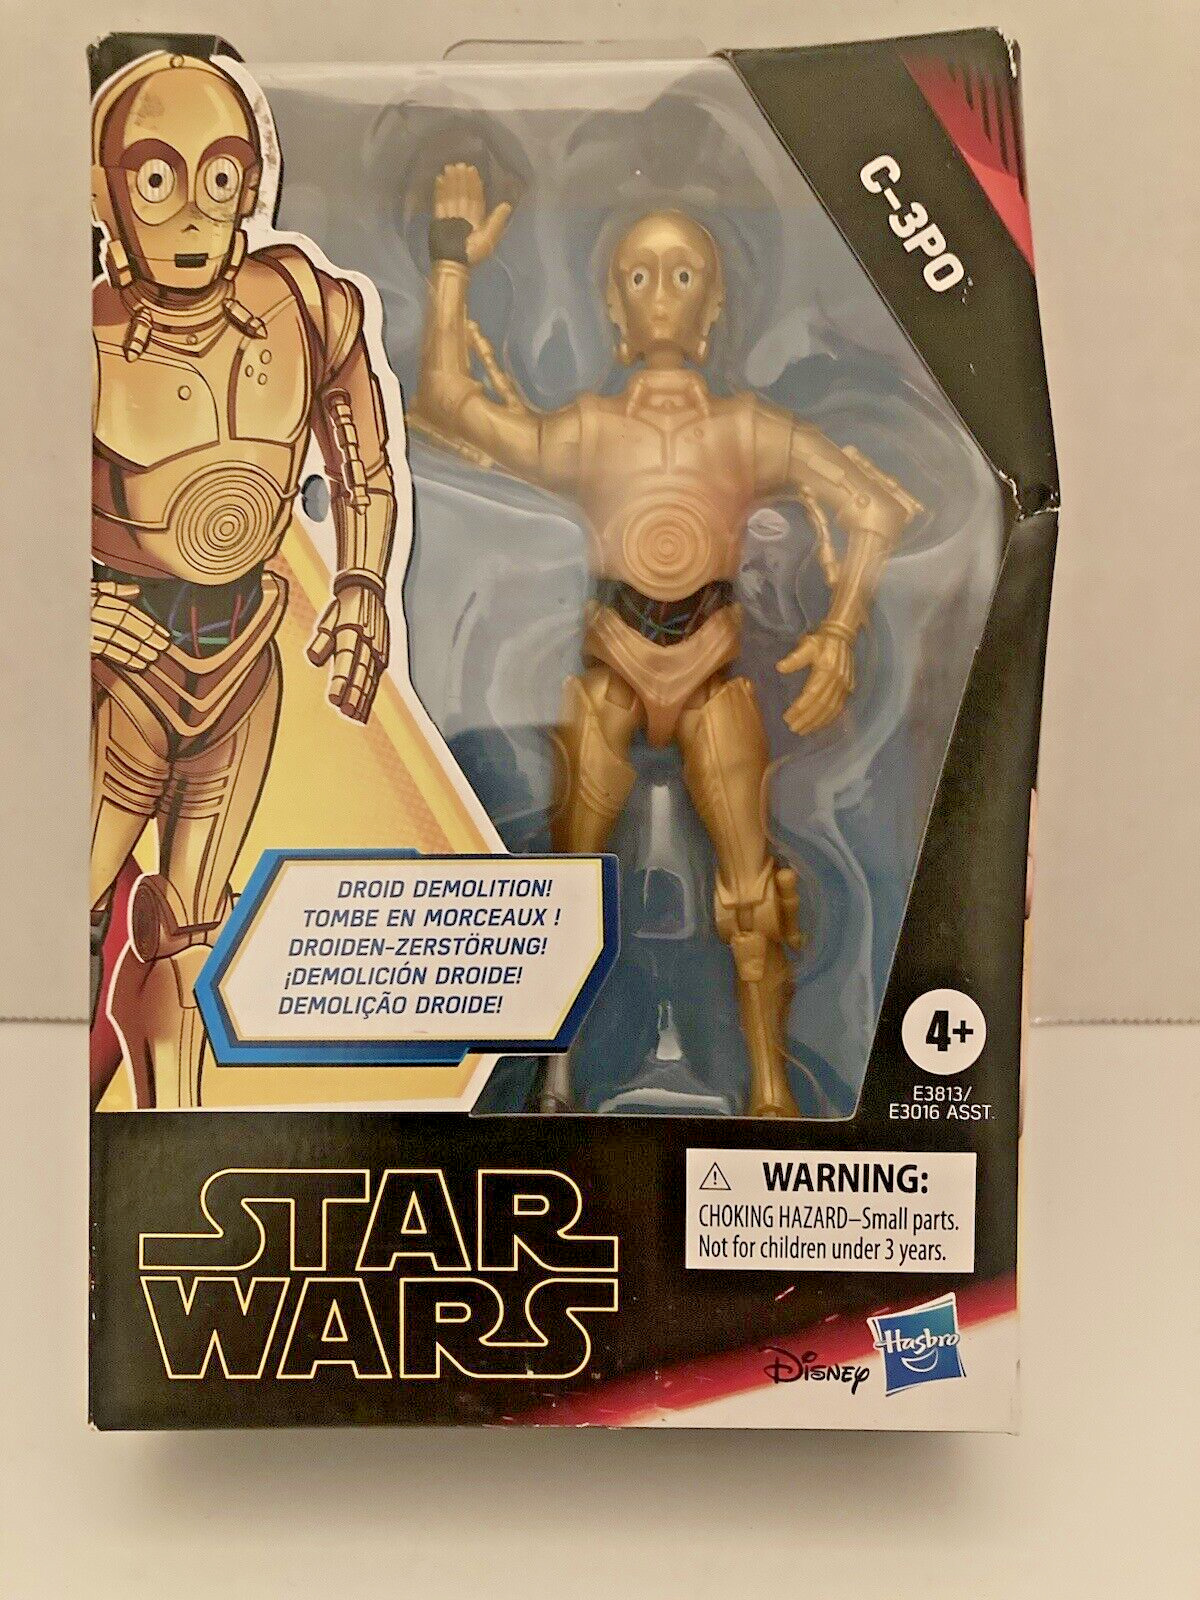 Hasbro Star Wars Galaxy of Adventures C-3PO Toy Action Figure